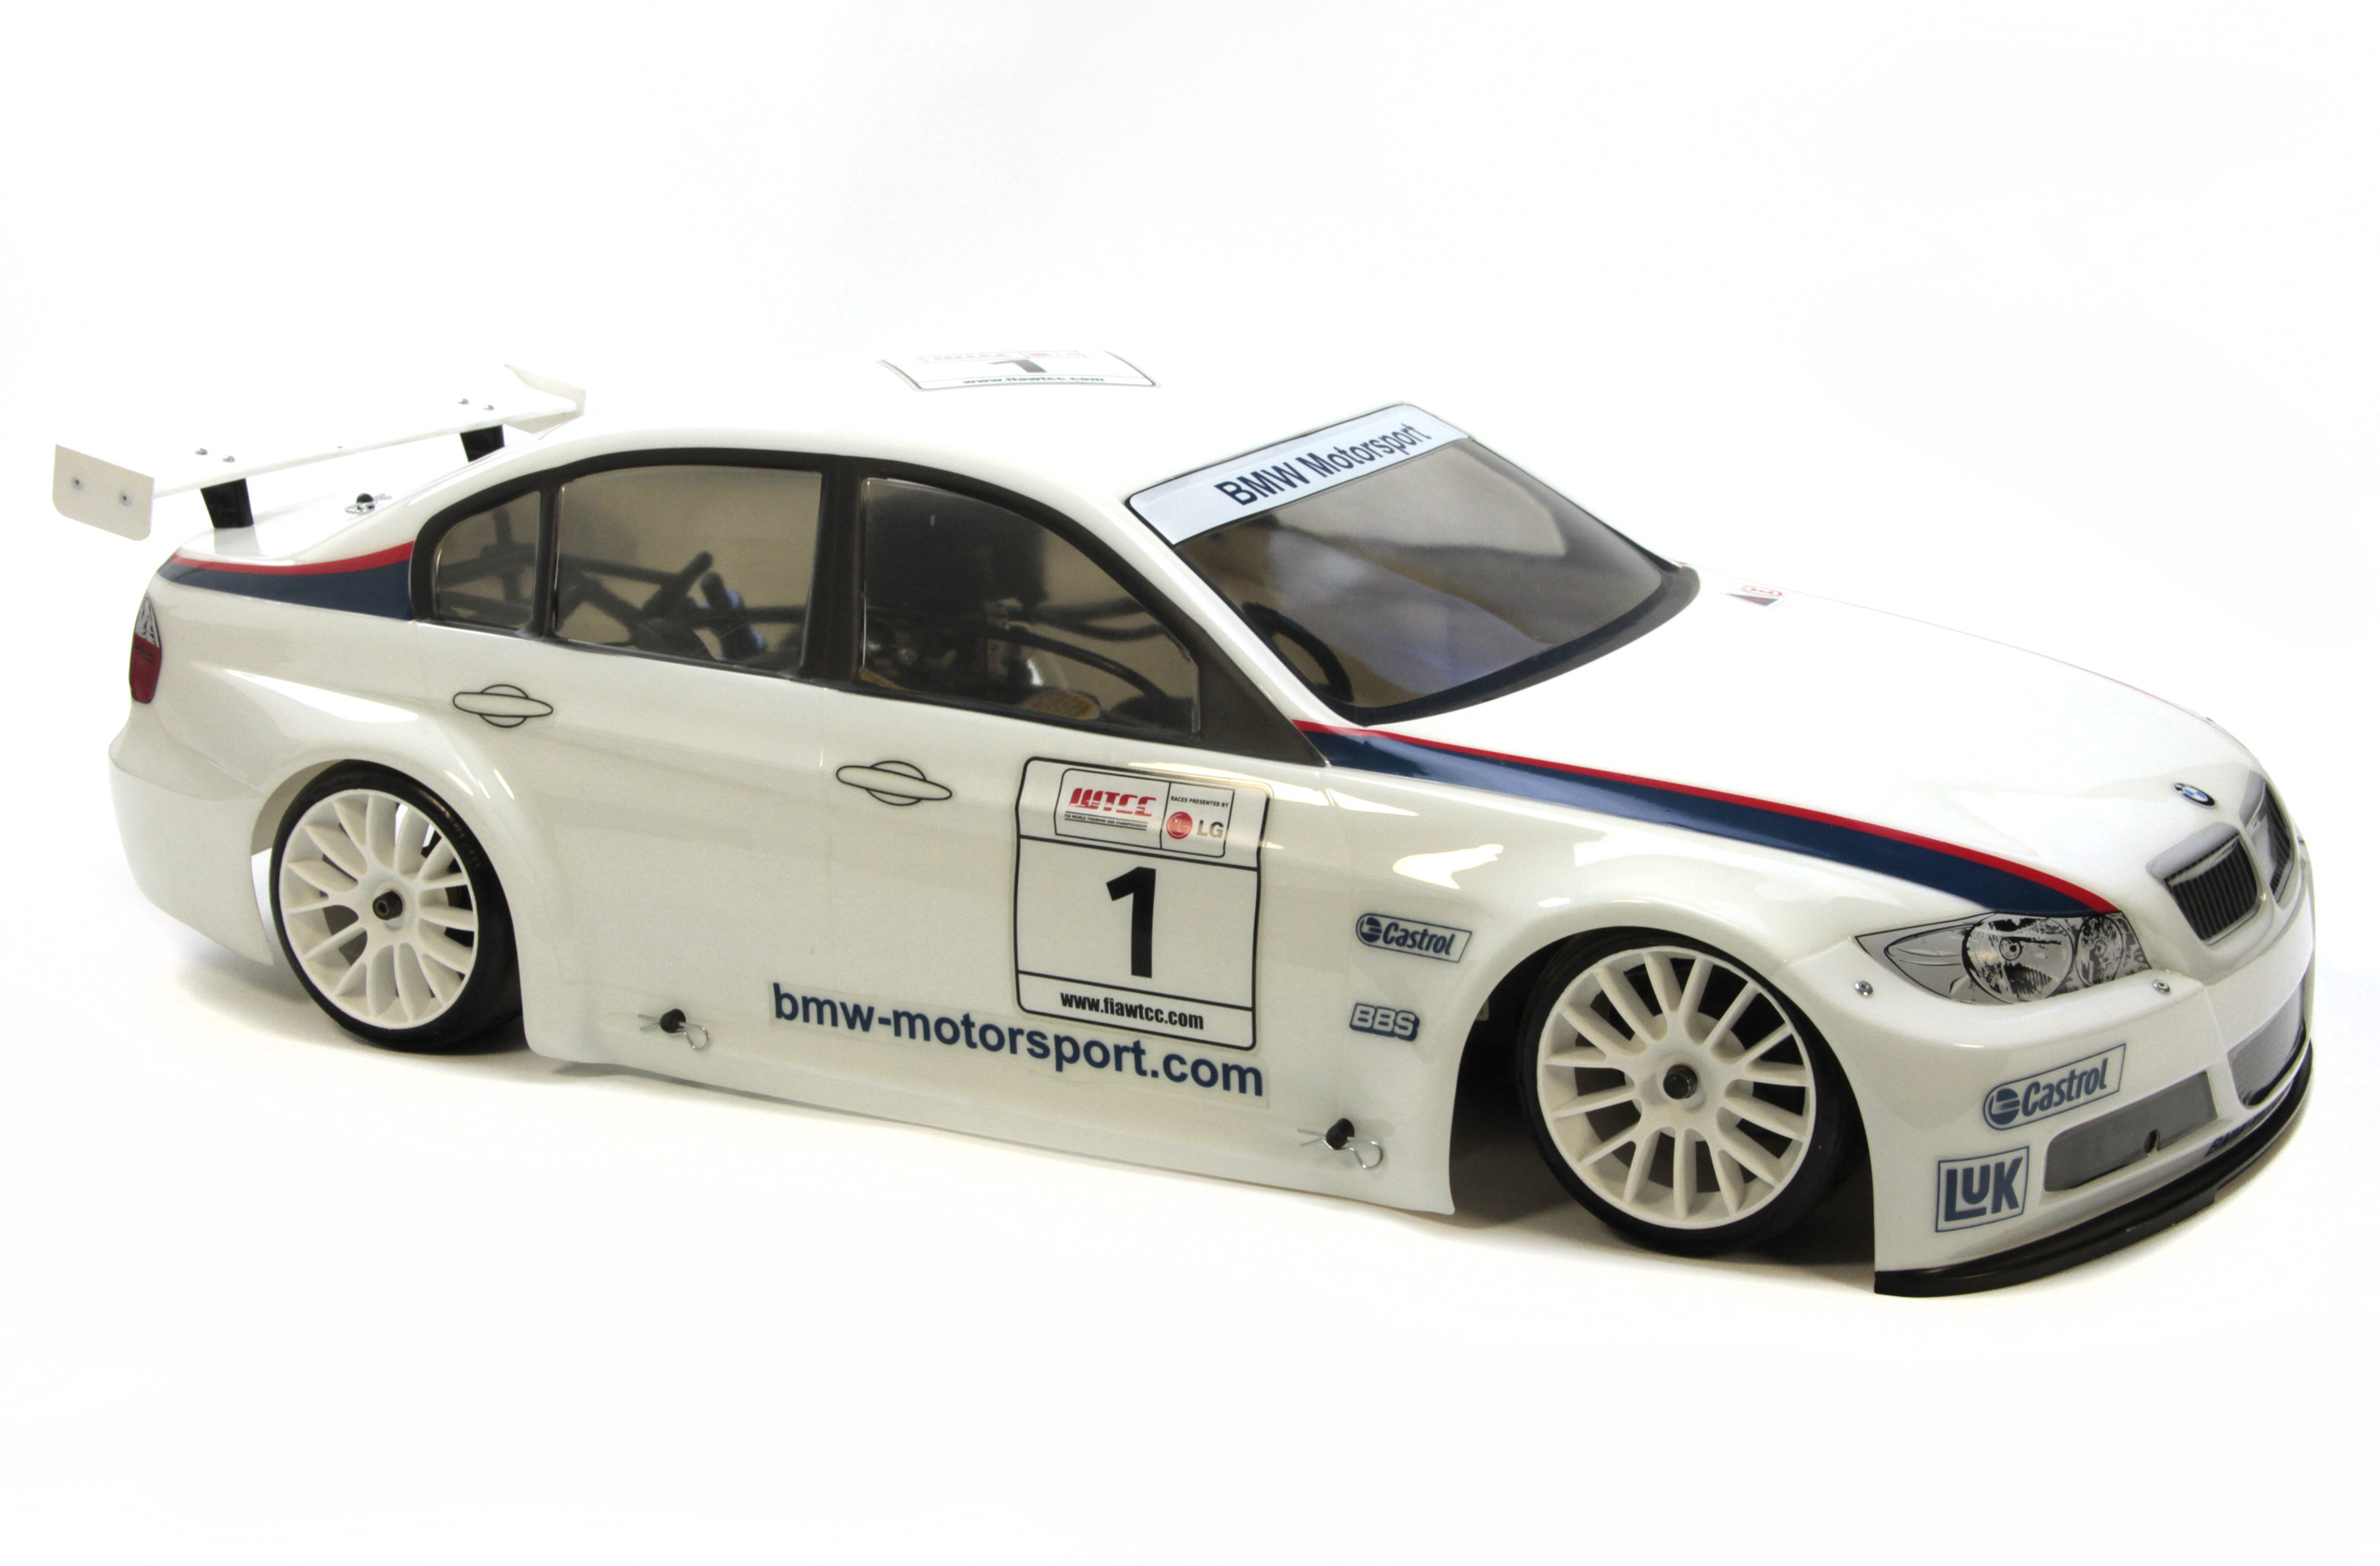 FG Raceline with BMW 320si body shell